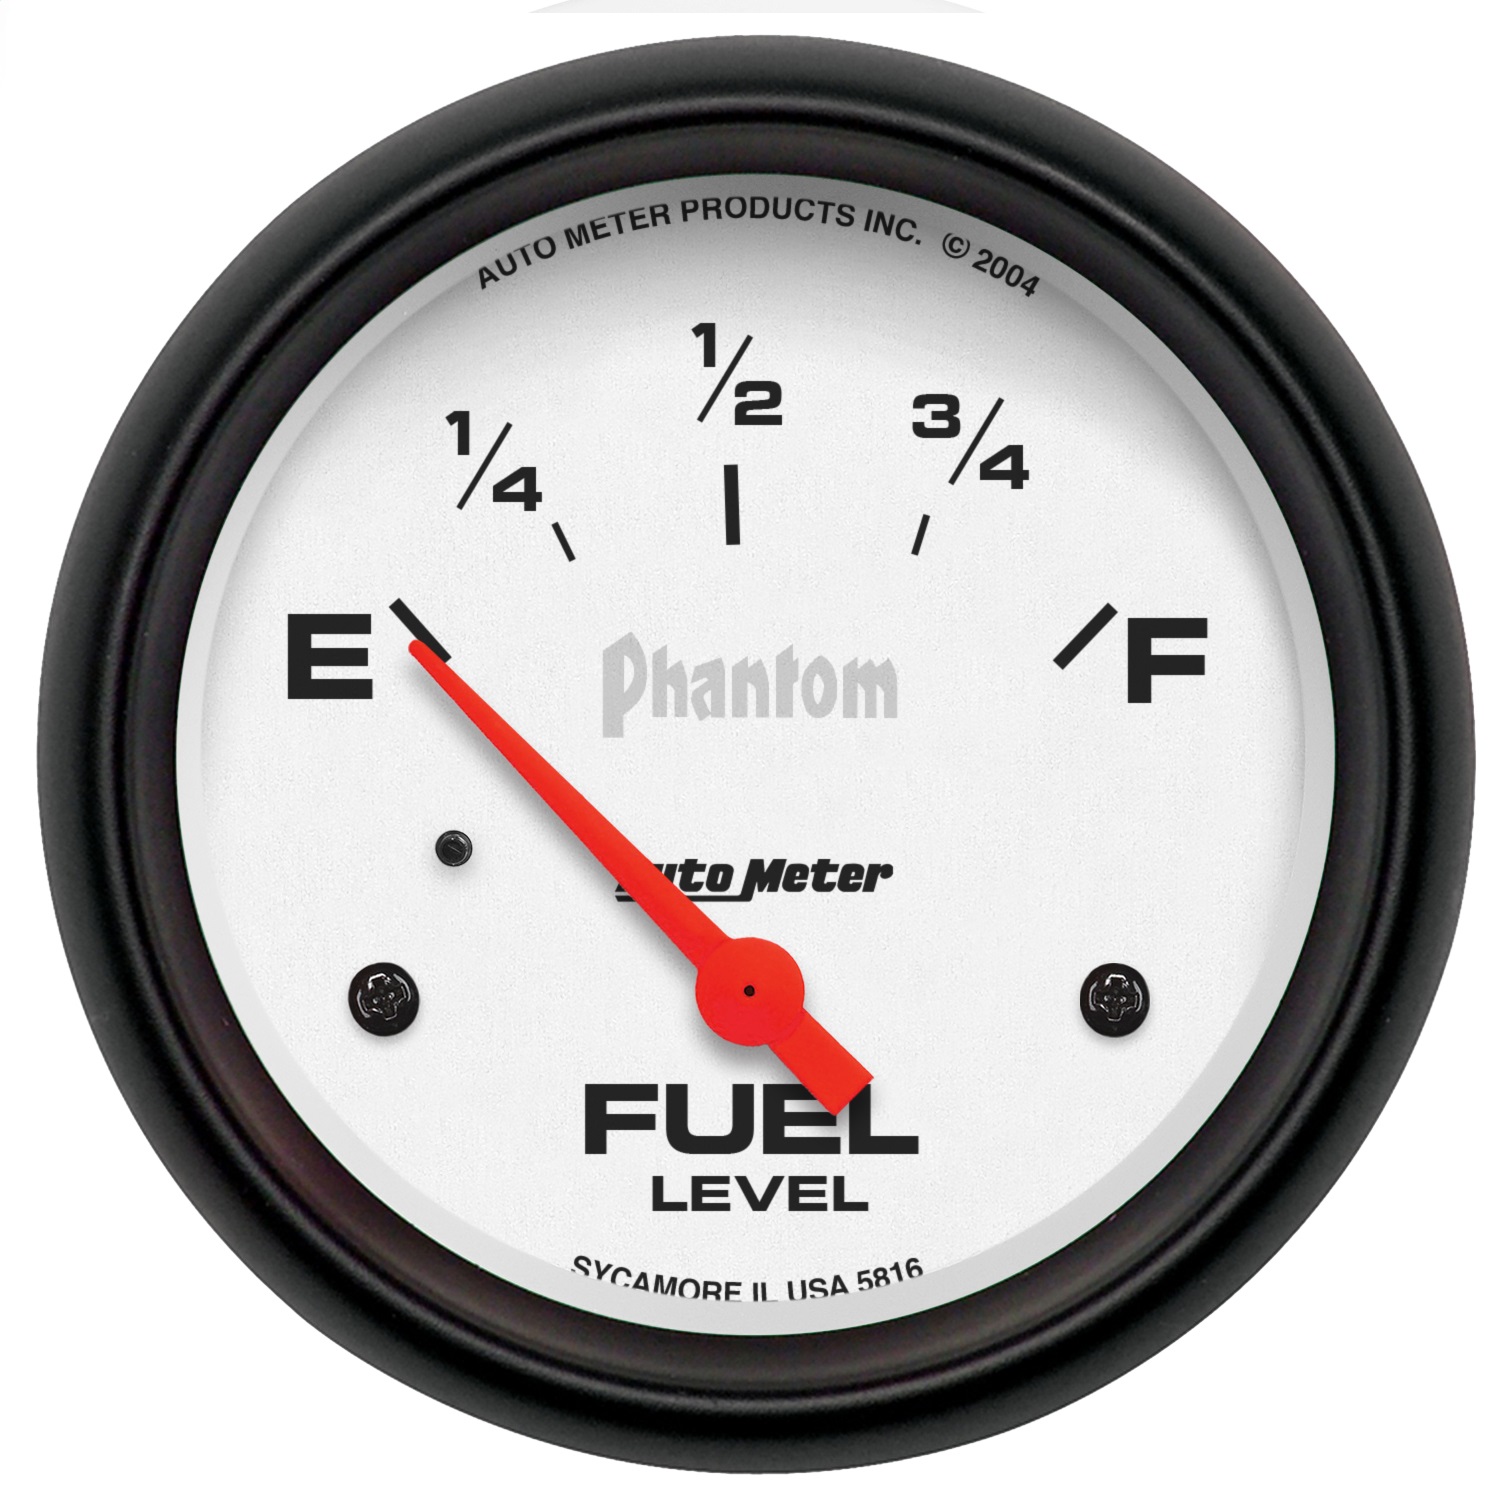 Auto Meter Auto Meter 5816 Phantom; Electric Fuel Level Gauge